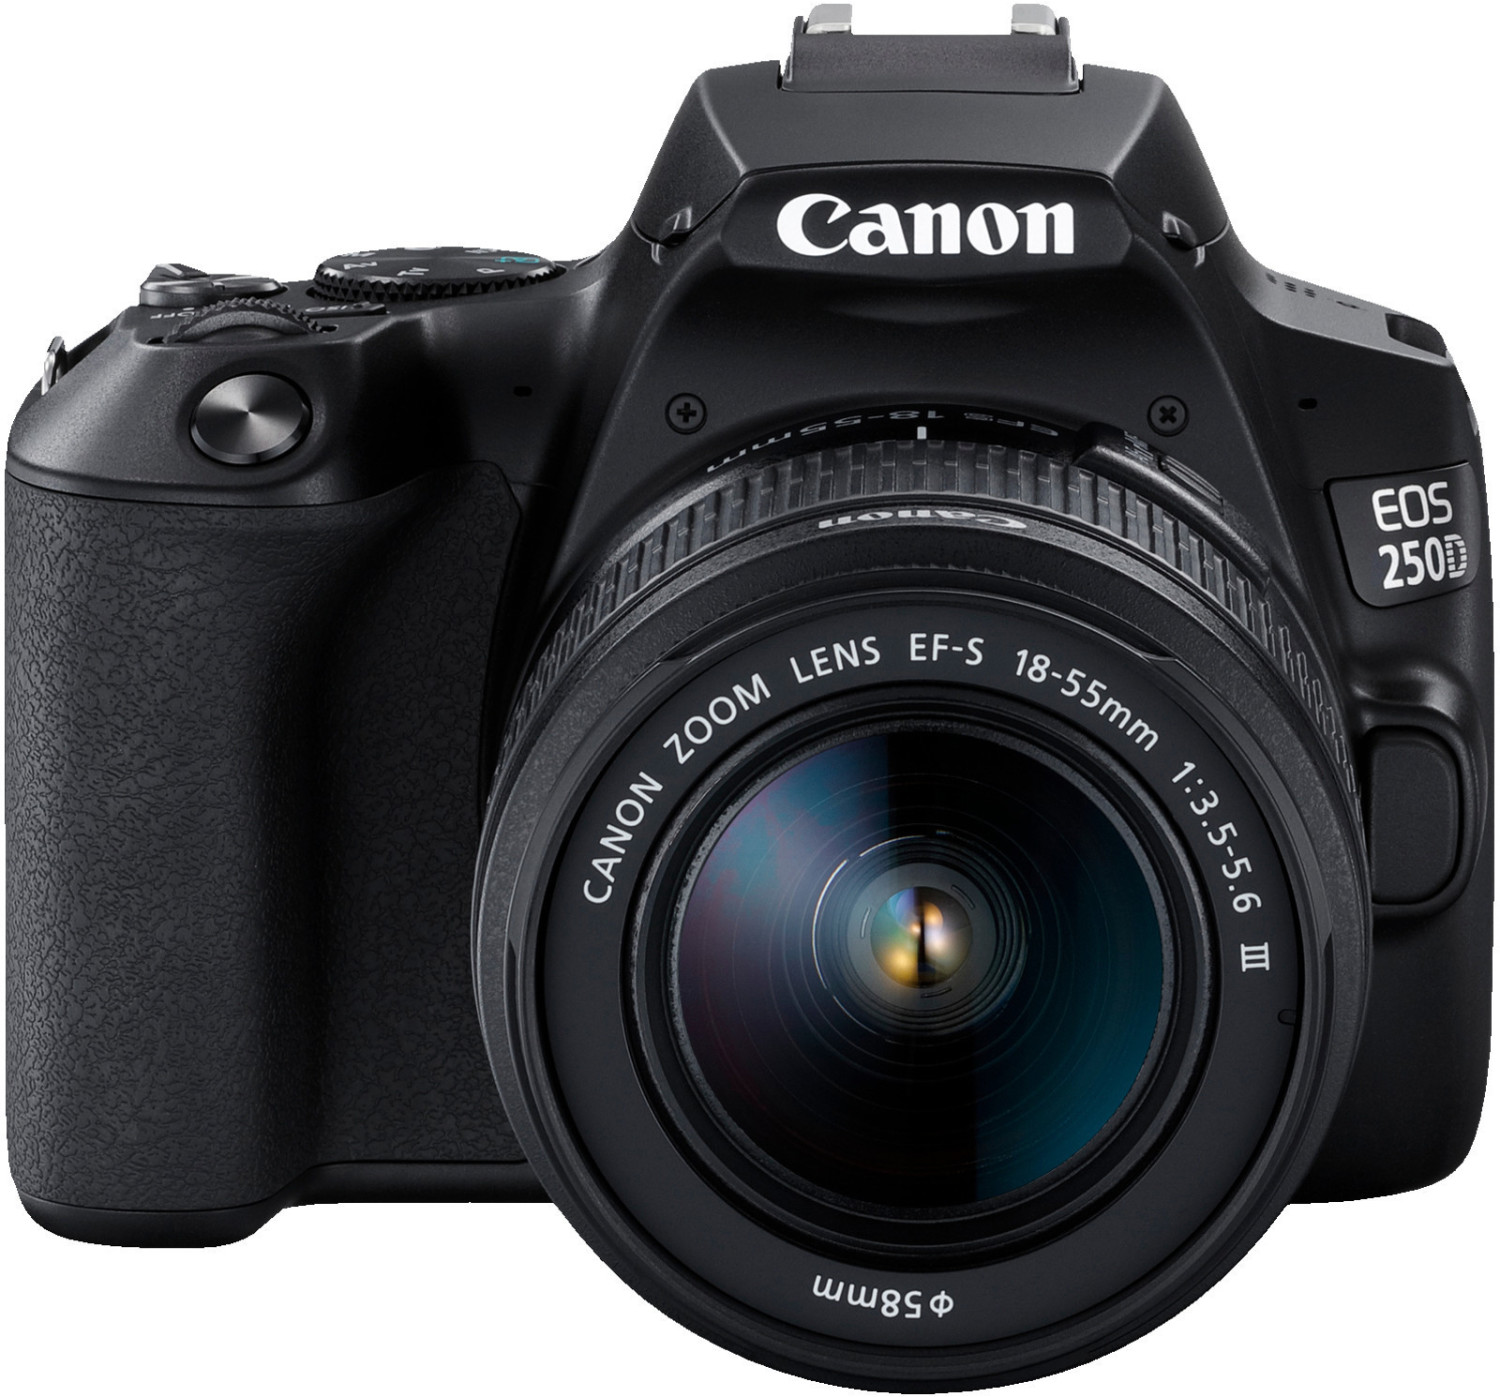 659,00 ab 18-55 Kit 250D Preisvergleich € | bei Canon DC EOS mm III